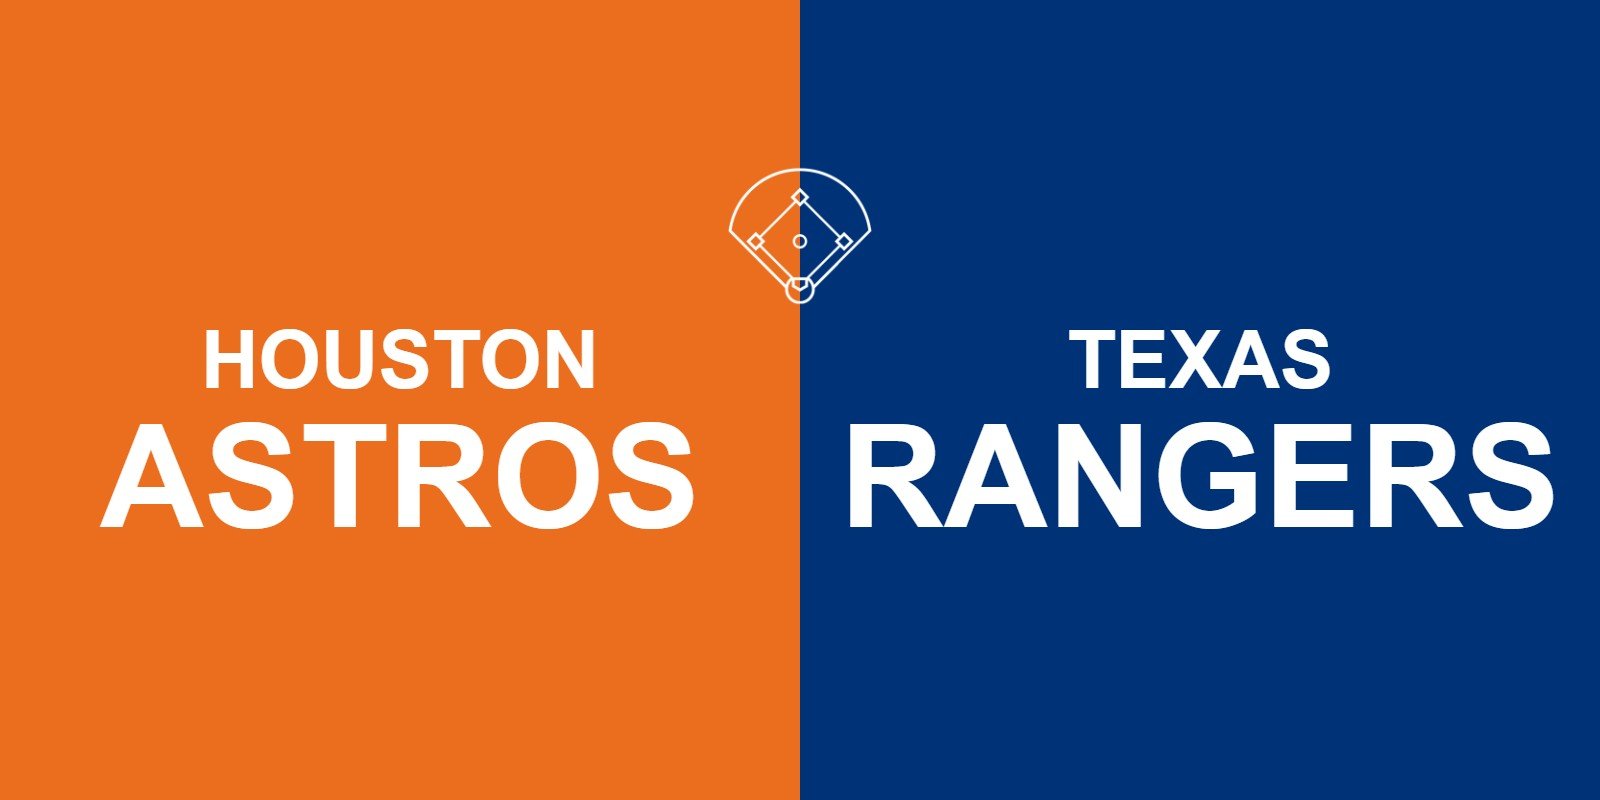 Astros vs Rangers Tickets